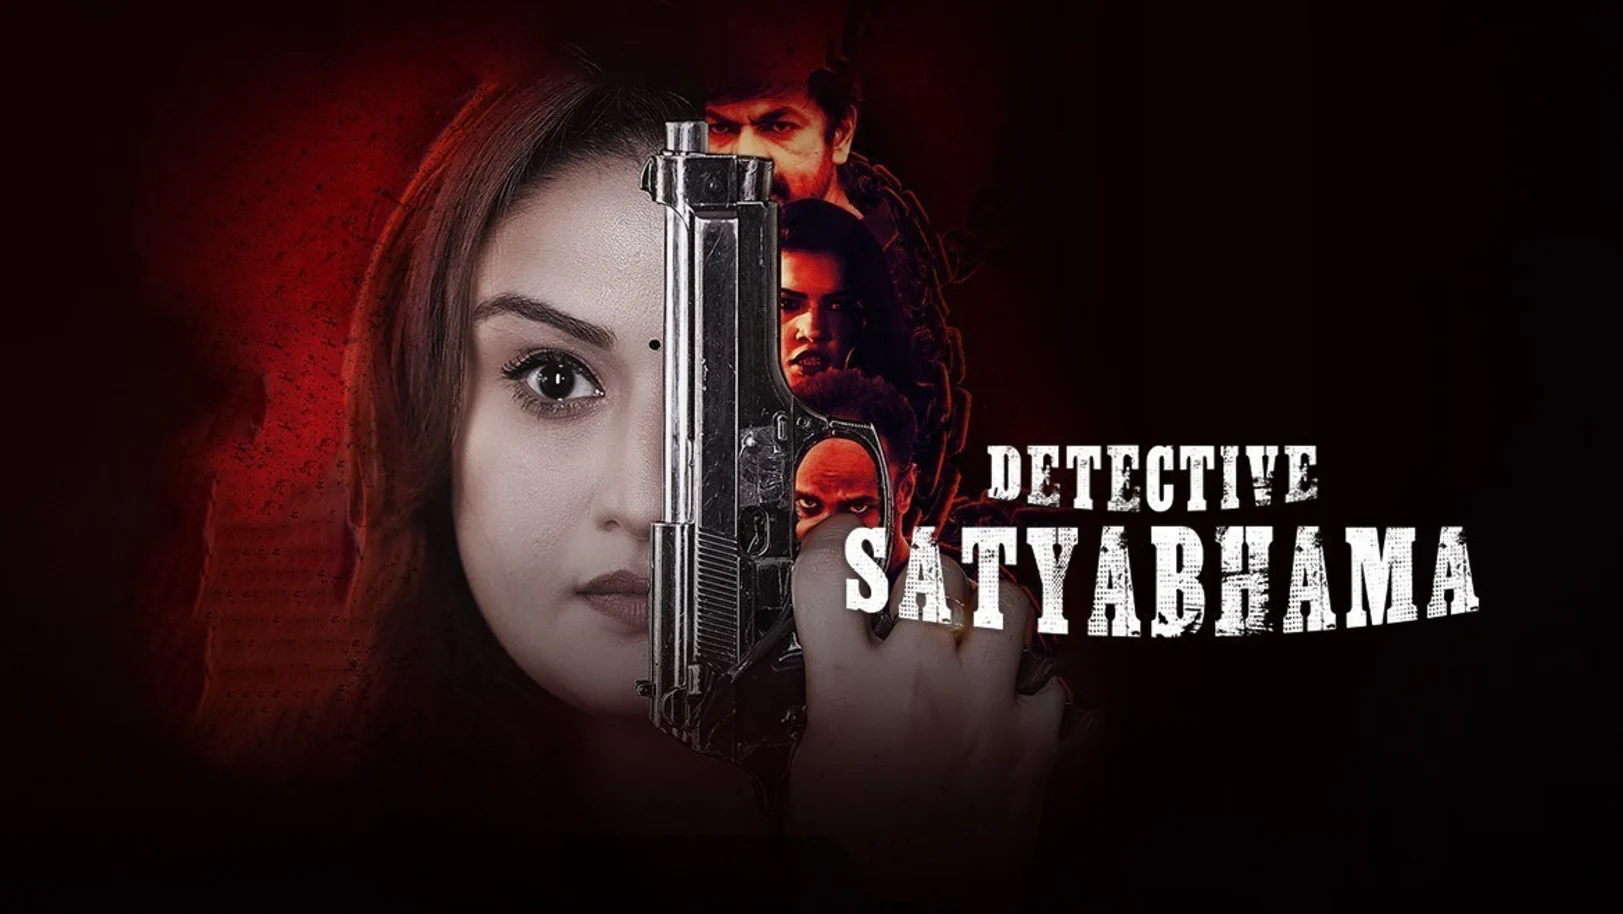 Detective Sathyabama Movie